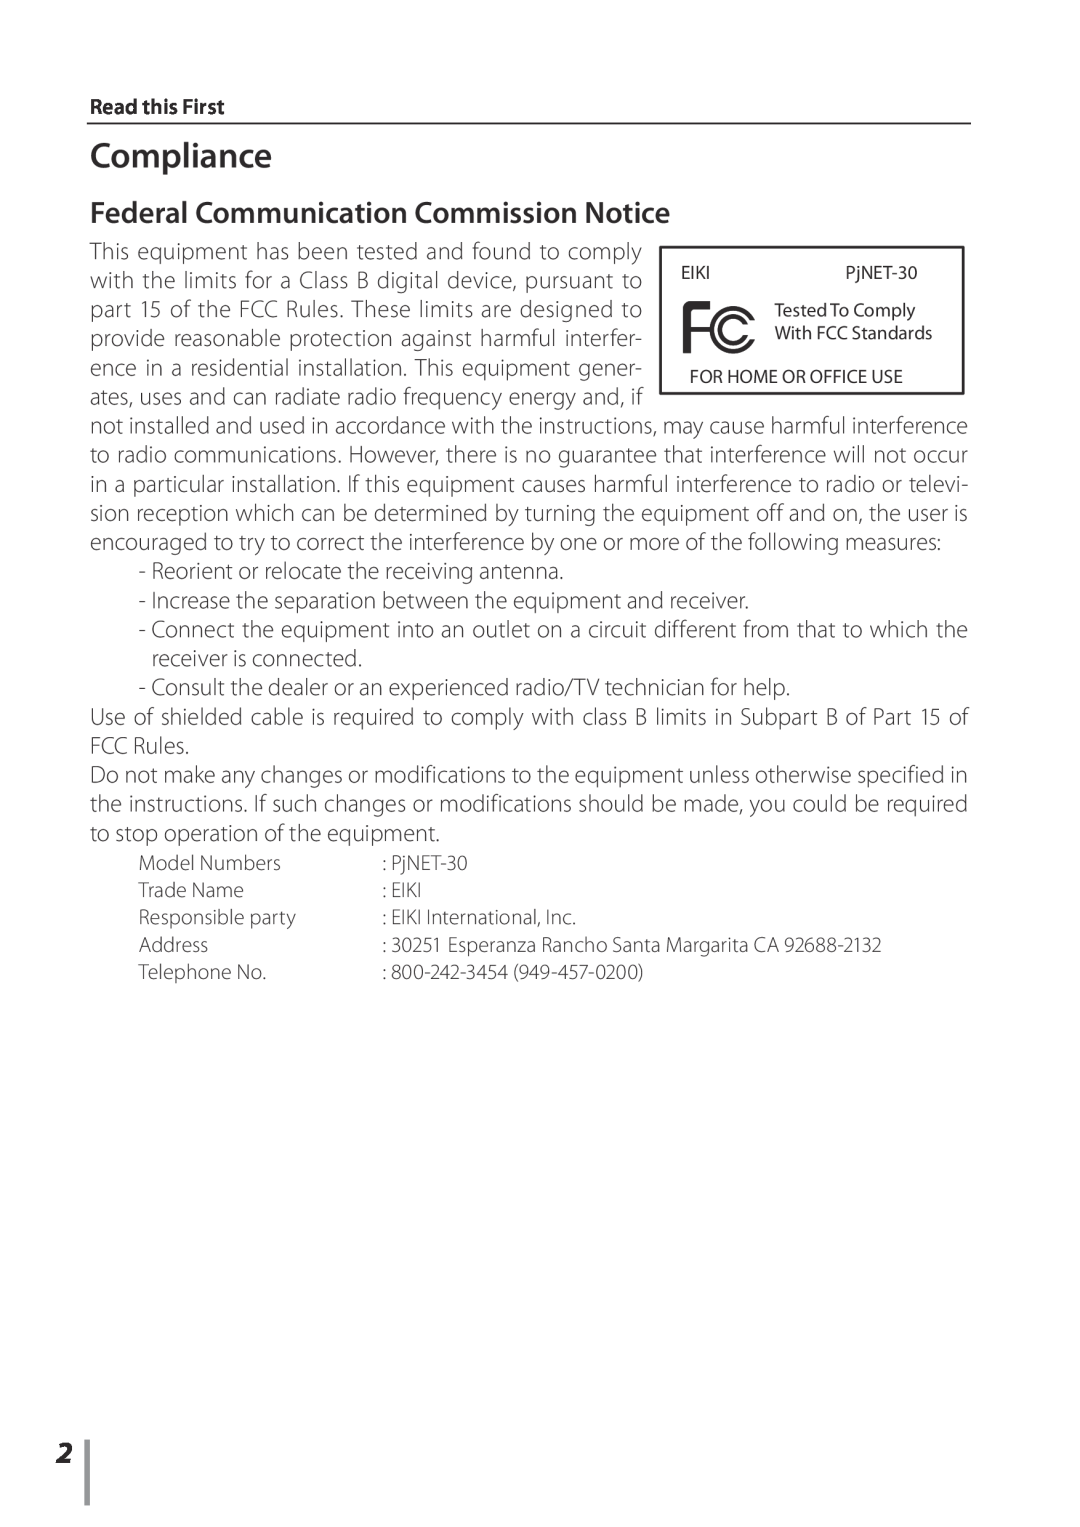 Eiki PJNET-30 setup guide Compliance, Federal Communication Commission Notice 